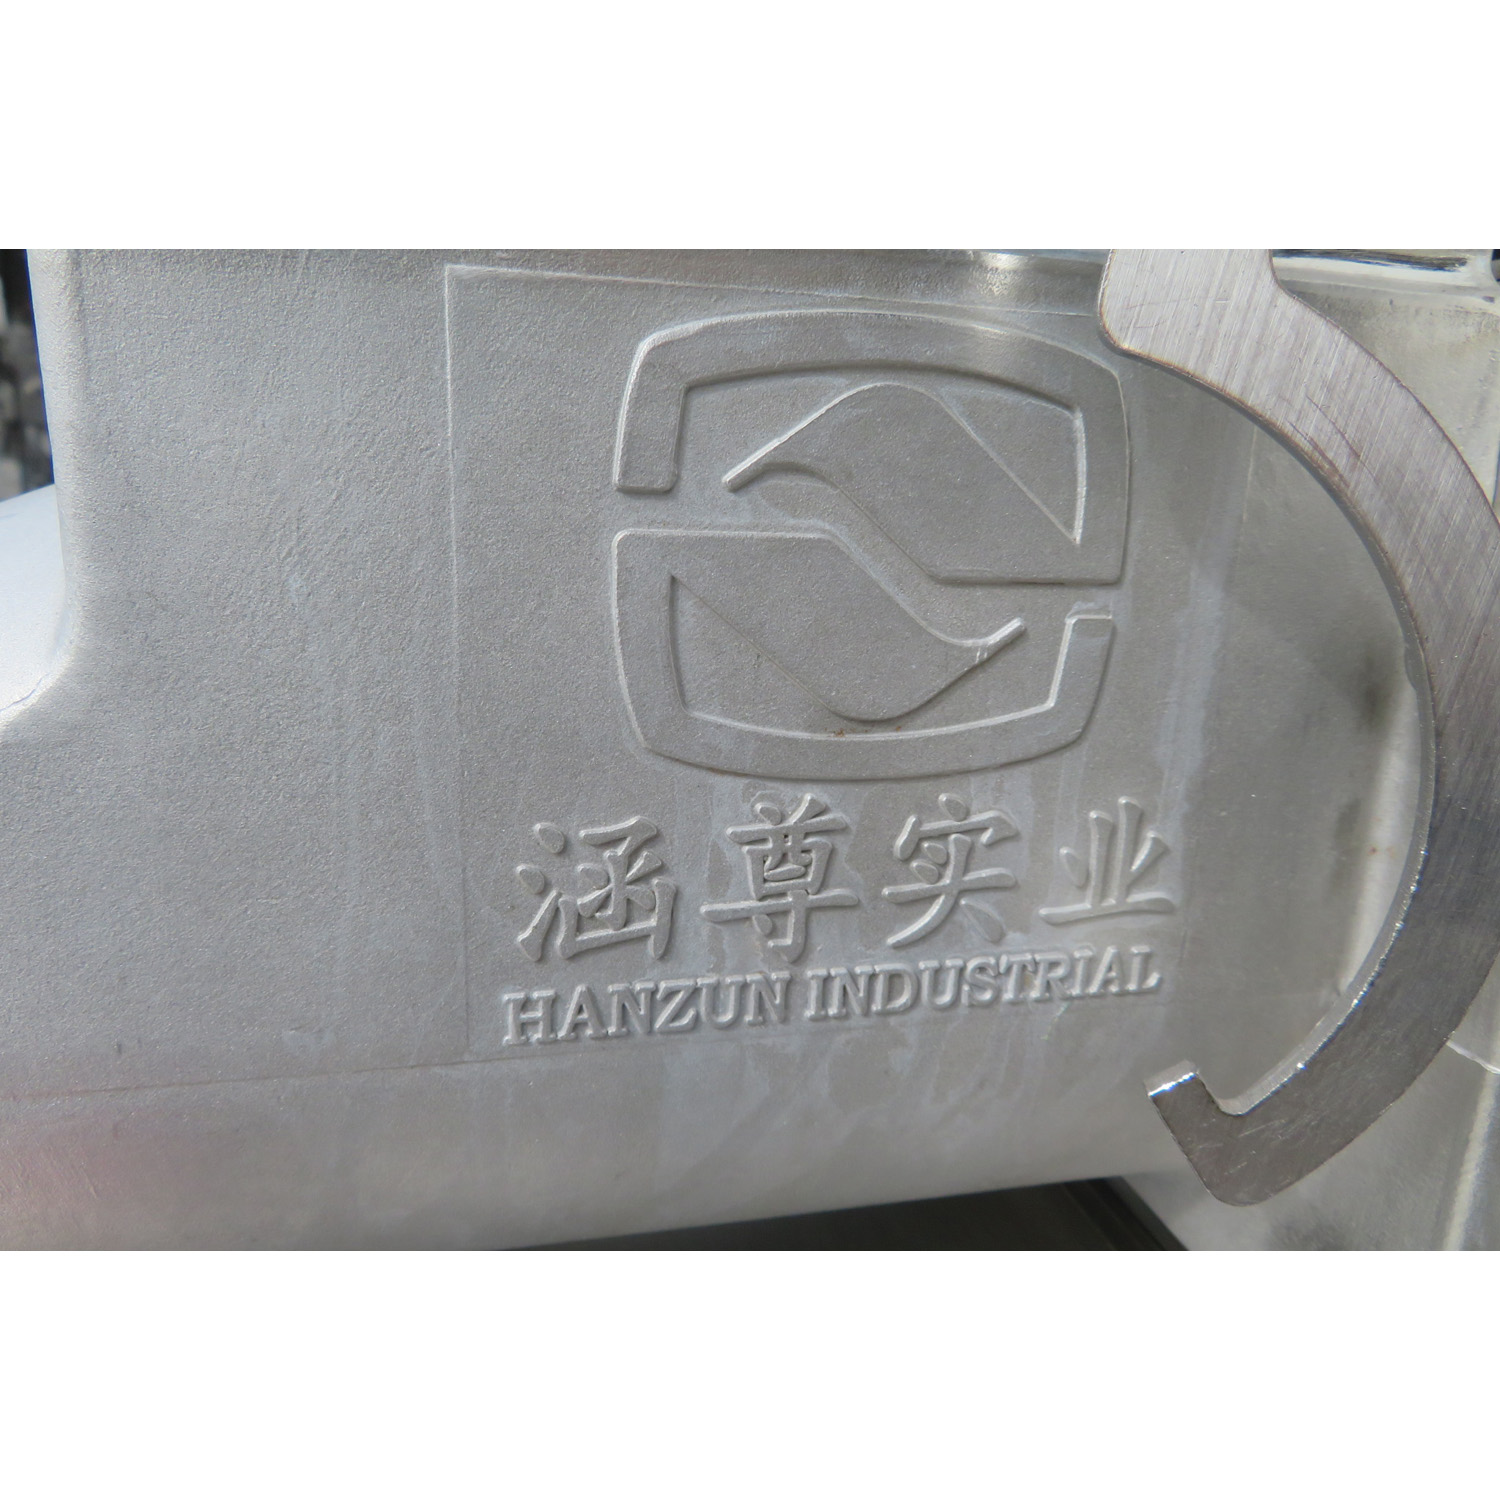 Hanzun HZ-60 Cookie Extrusion Machine, Used Excellent Condition image 3